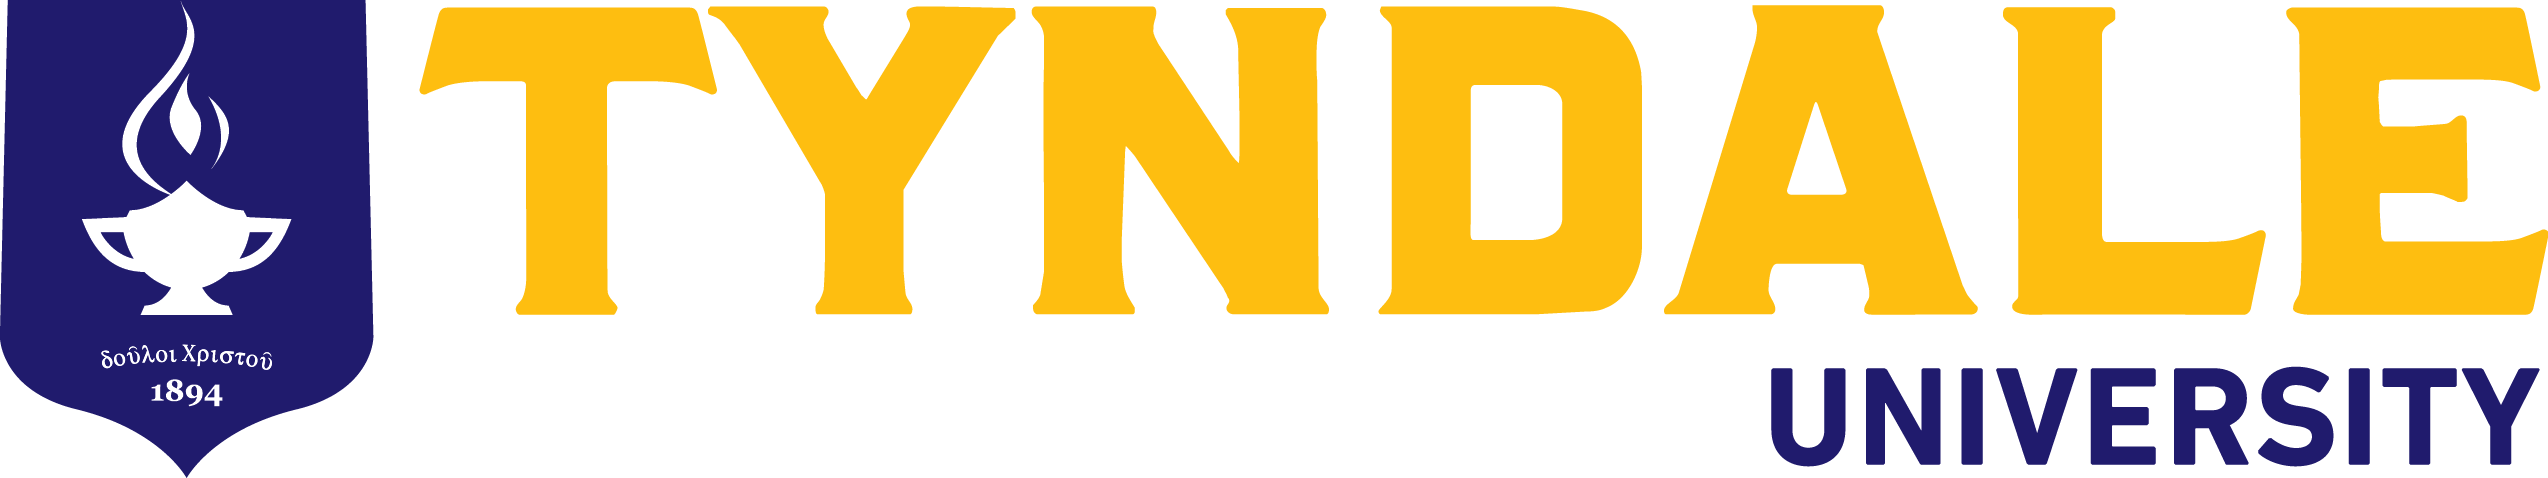 tyndale-university-logo-hor-colour-print